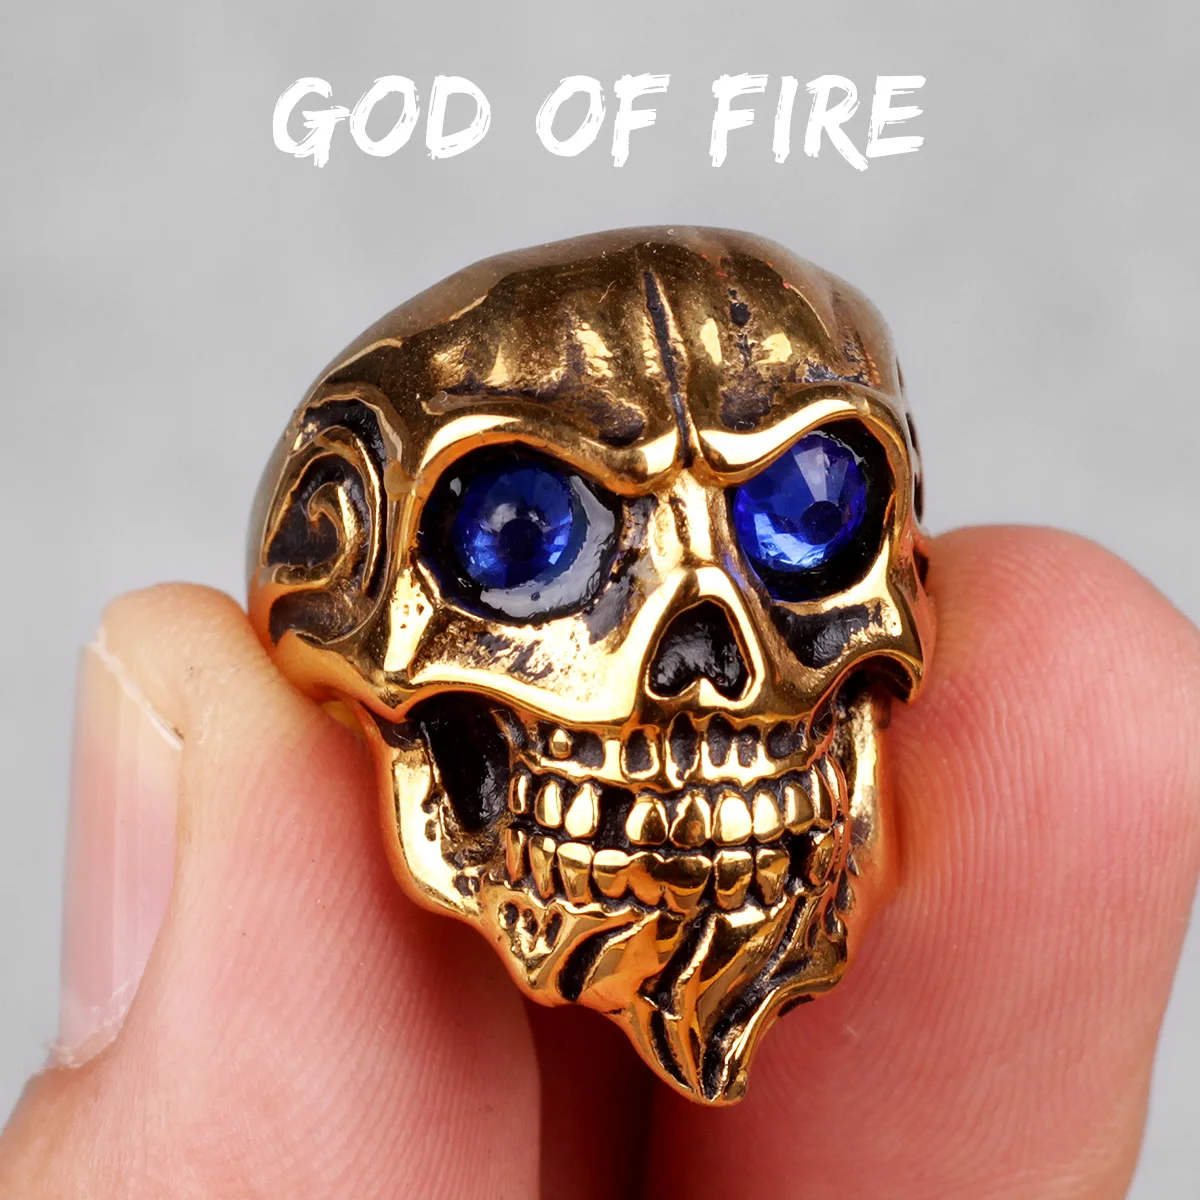 God of fire